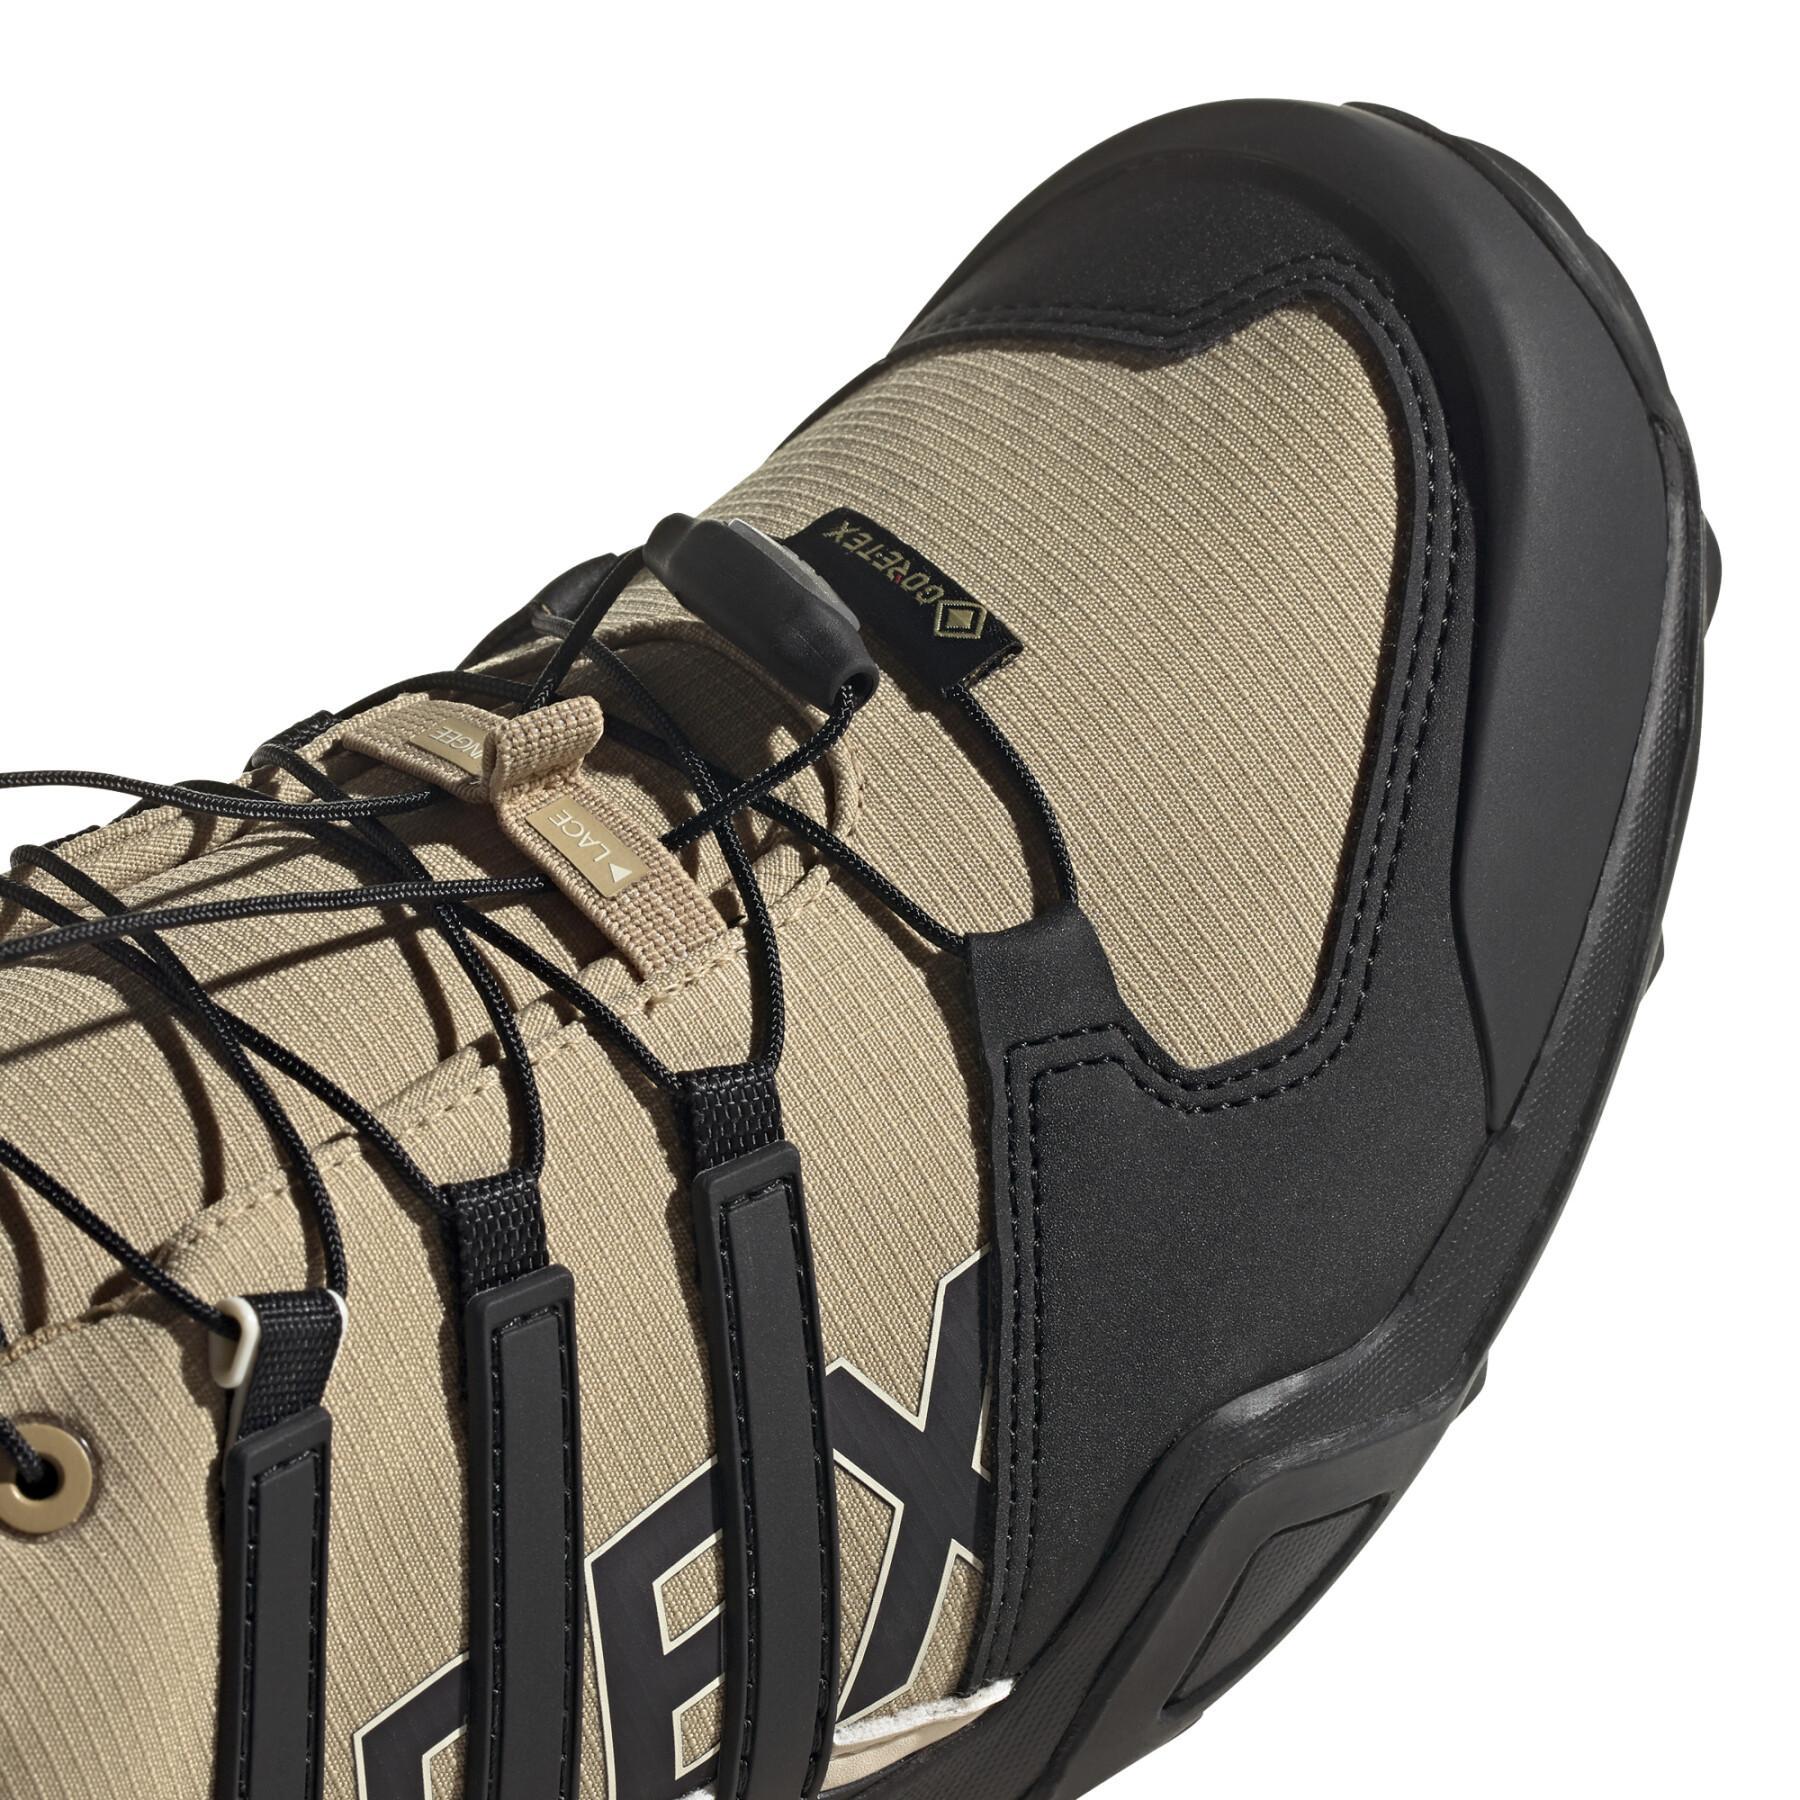 Hiking shoes adidas Terrex Swift R2 Gore-Tex